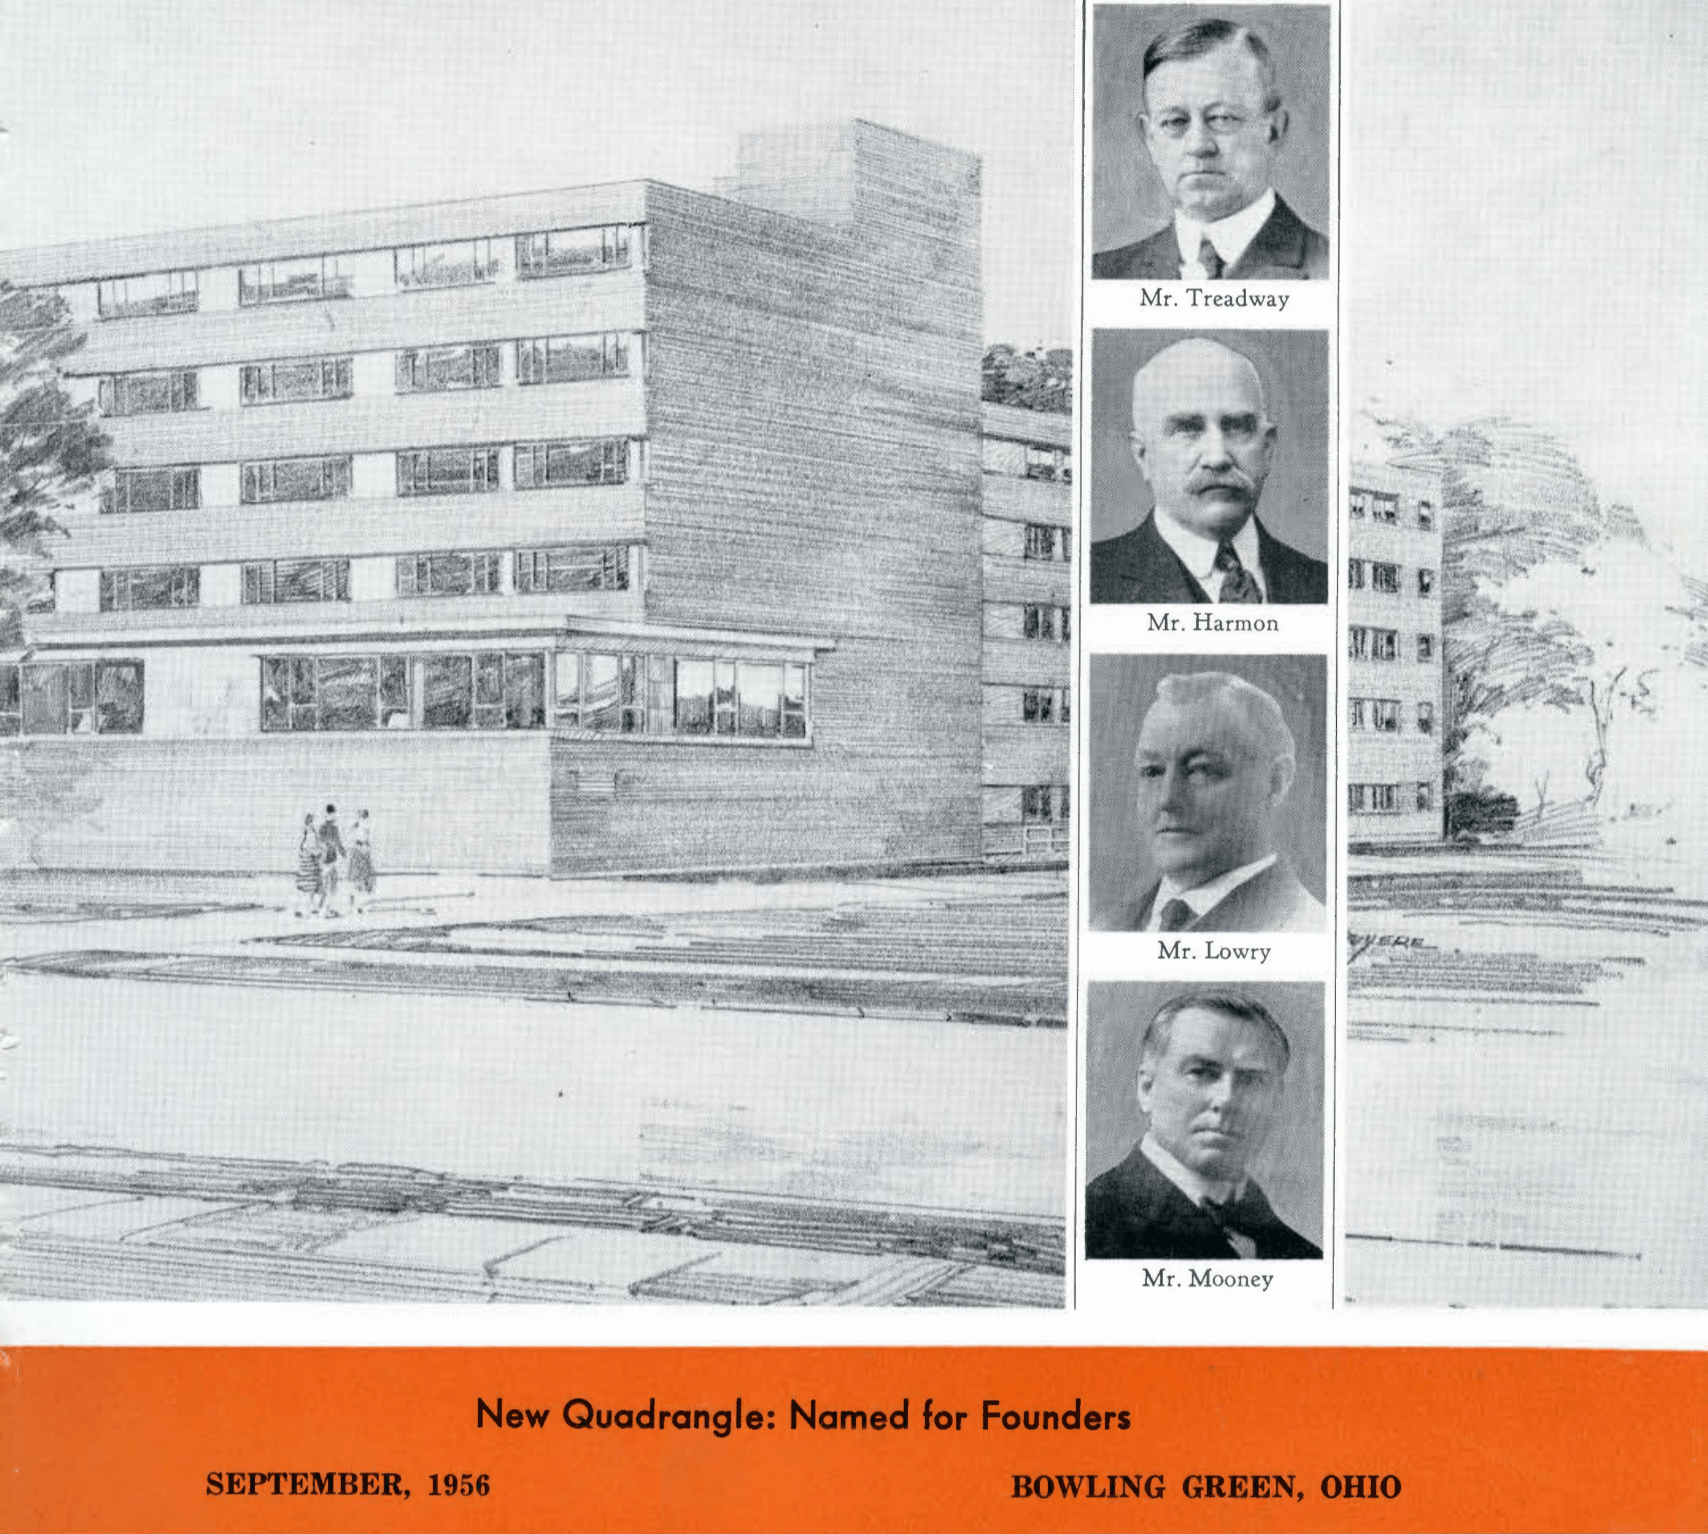 Cover of BGSU Magazine from 1956 shows four men instrumental in the founding of BGSU:  Francis W. Treadway, Gov. Judson Harmon, John Hamilton Lowry and Granville W. Mooney. 